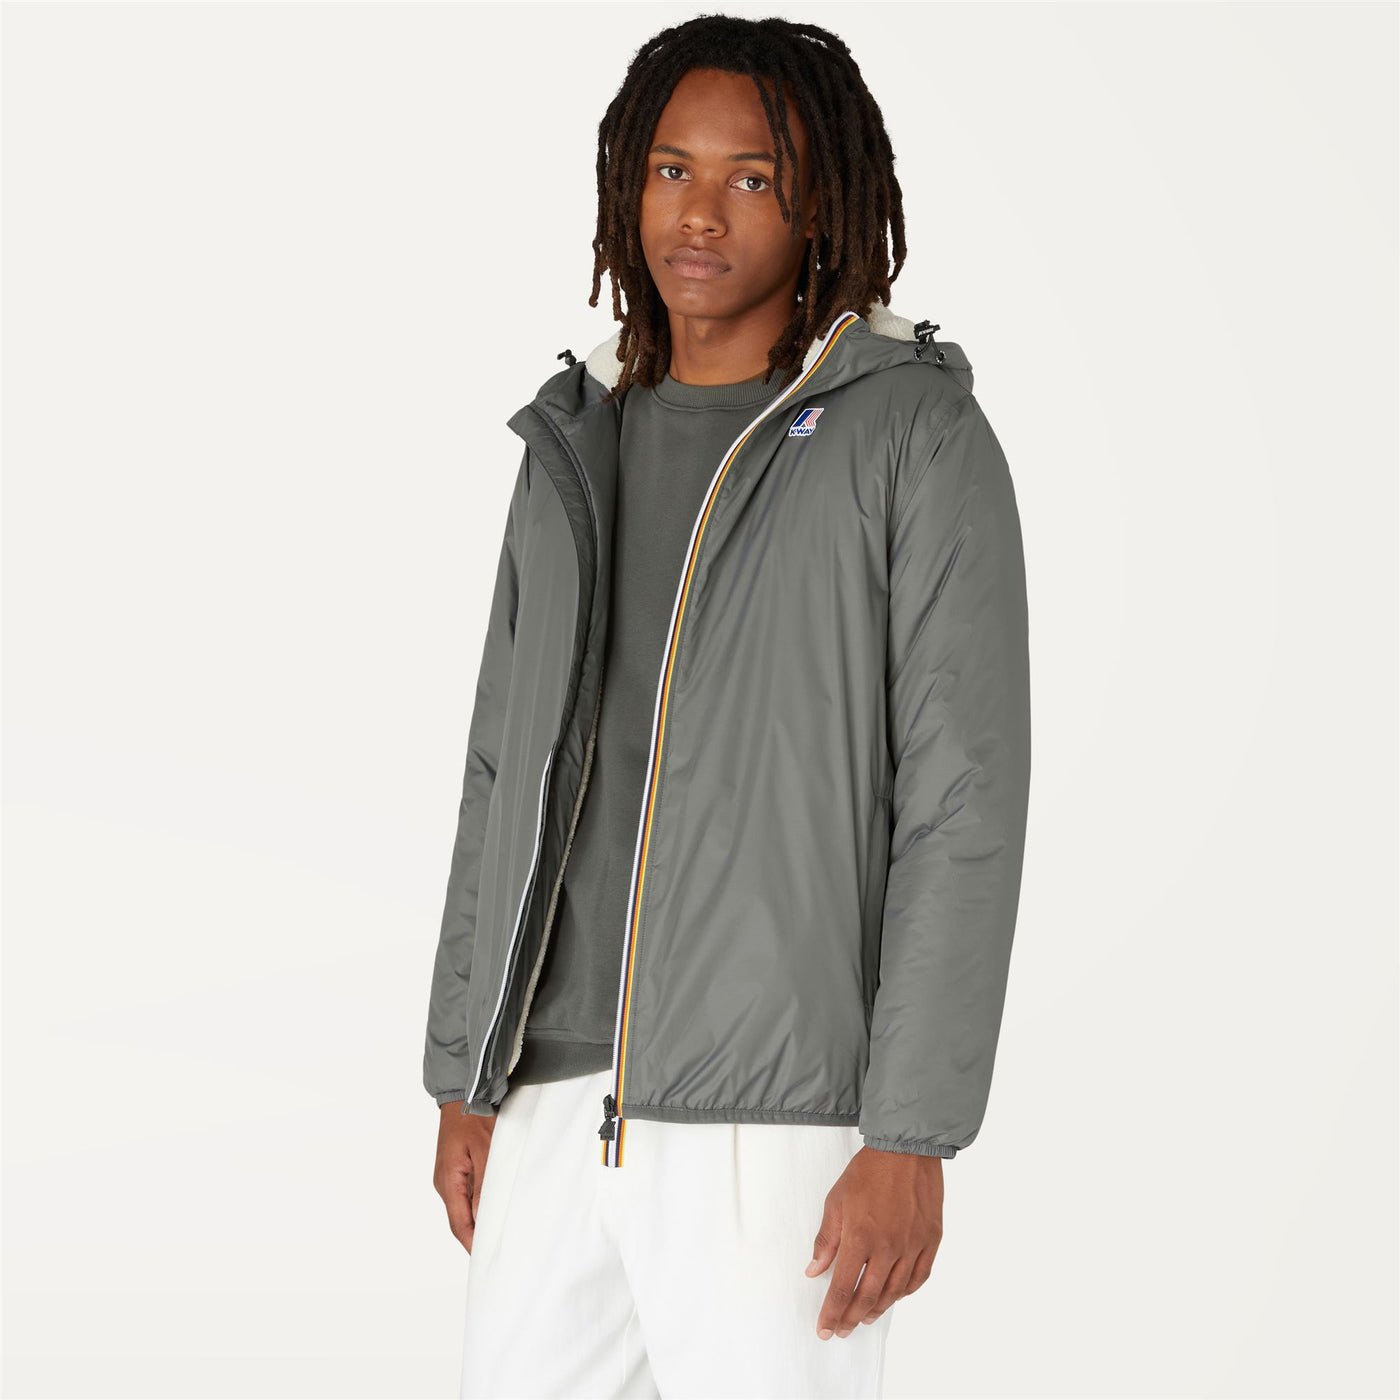 Claude Orsetto - Unisex Lined Full Zip Rain Jacket in Grey Smoked